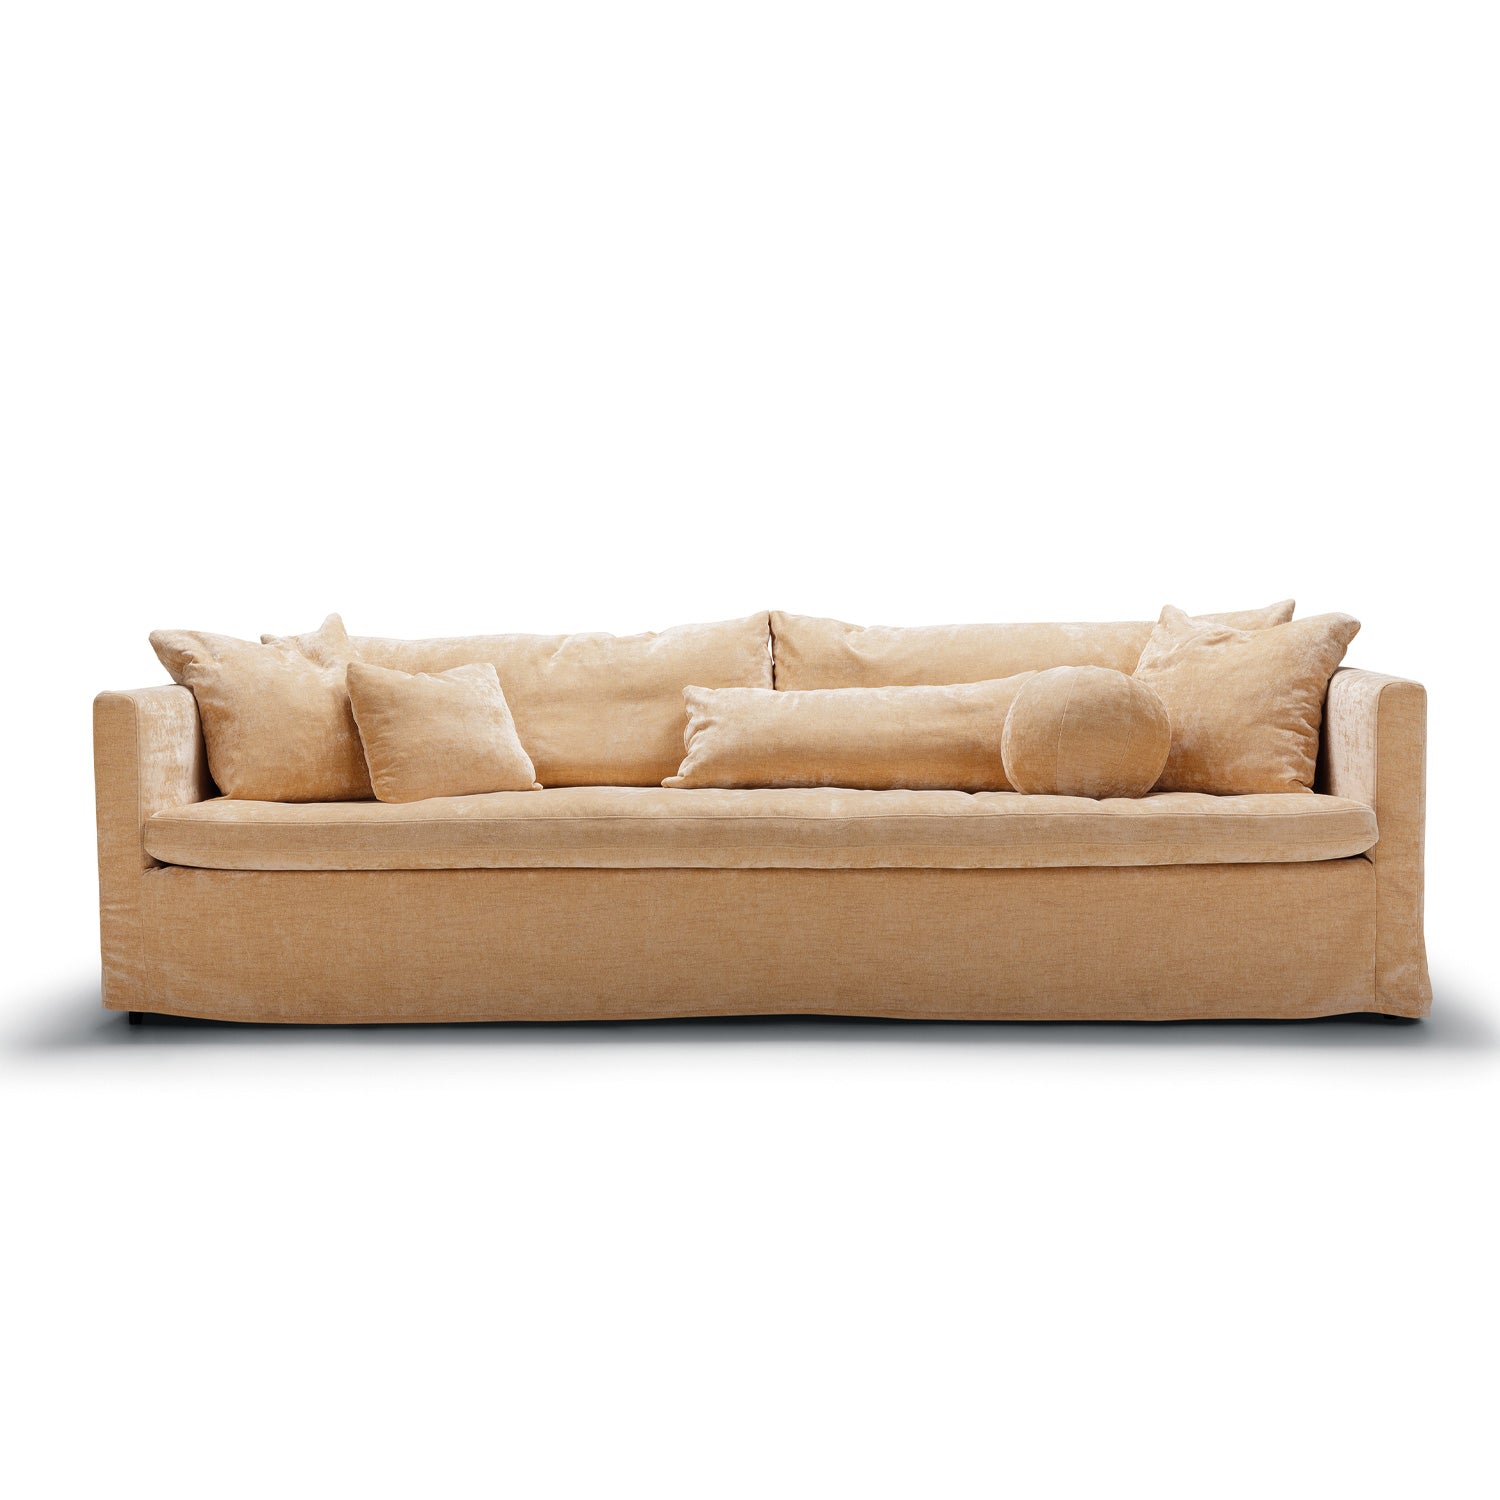 Standard 4 Seater Sofa - Fudge